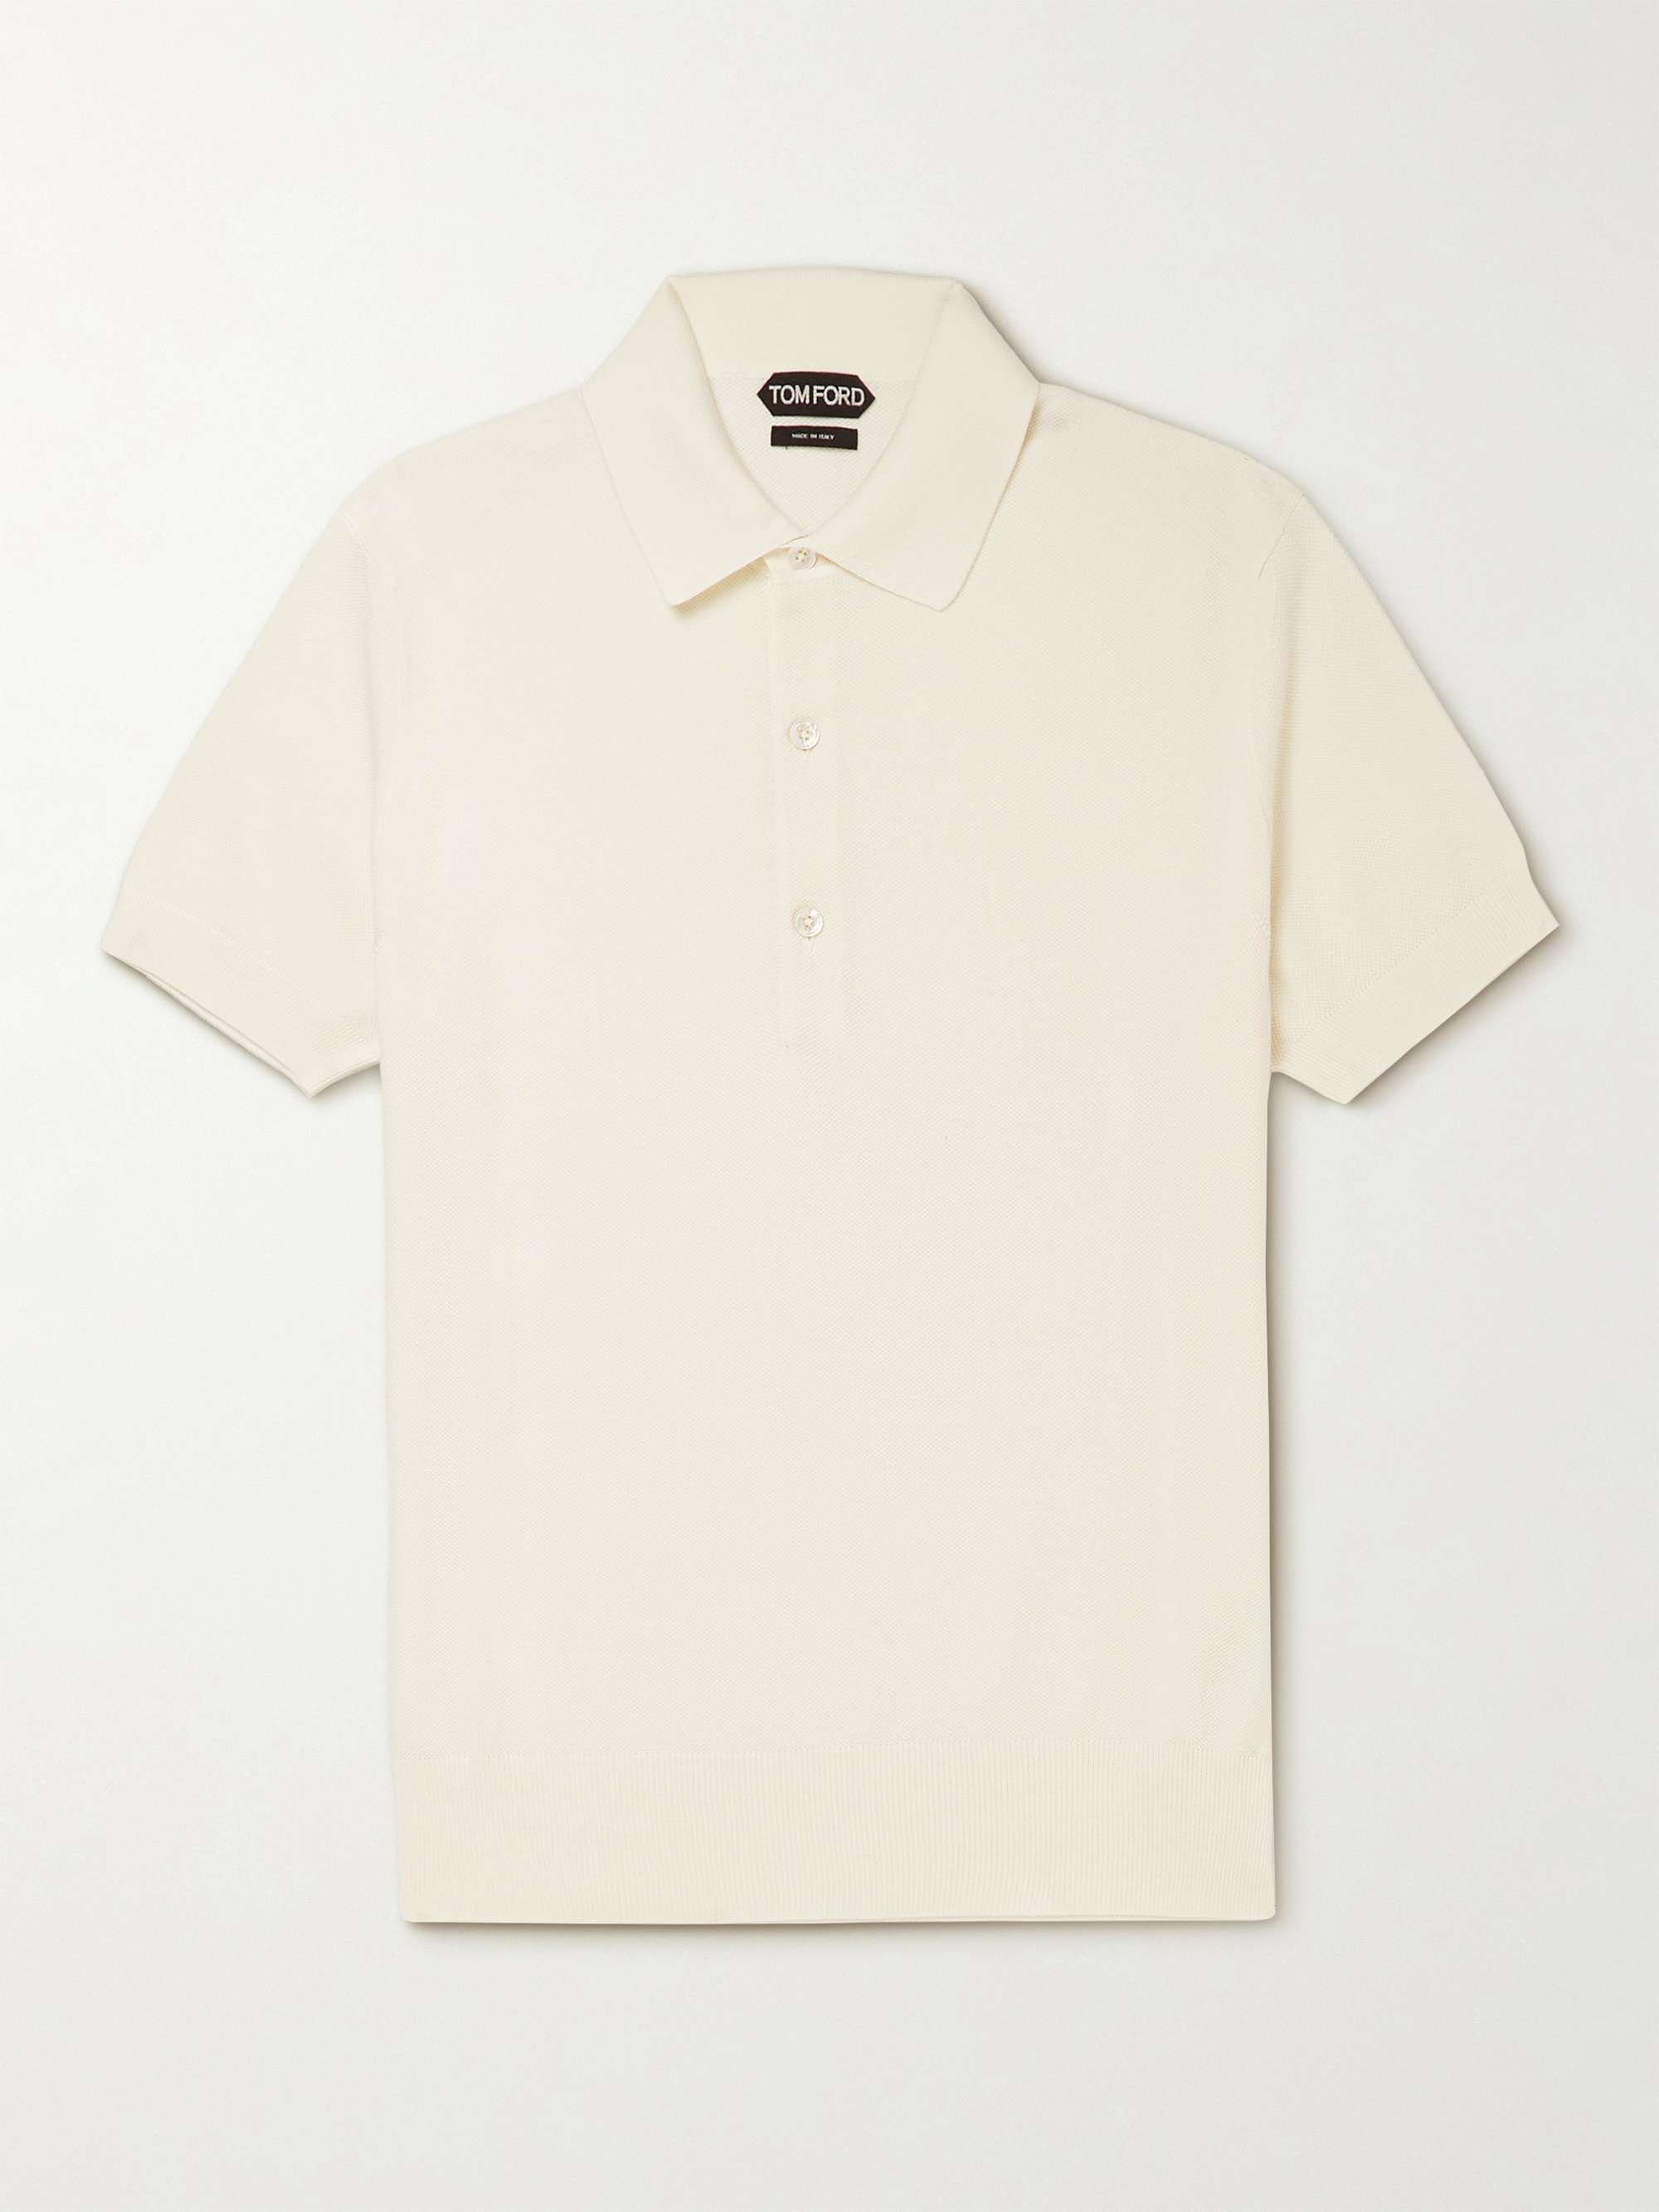 TOM FORD Silk and Cotton-Blend Piquè Polo Shirt | MR PORTER